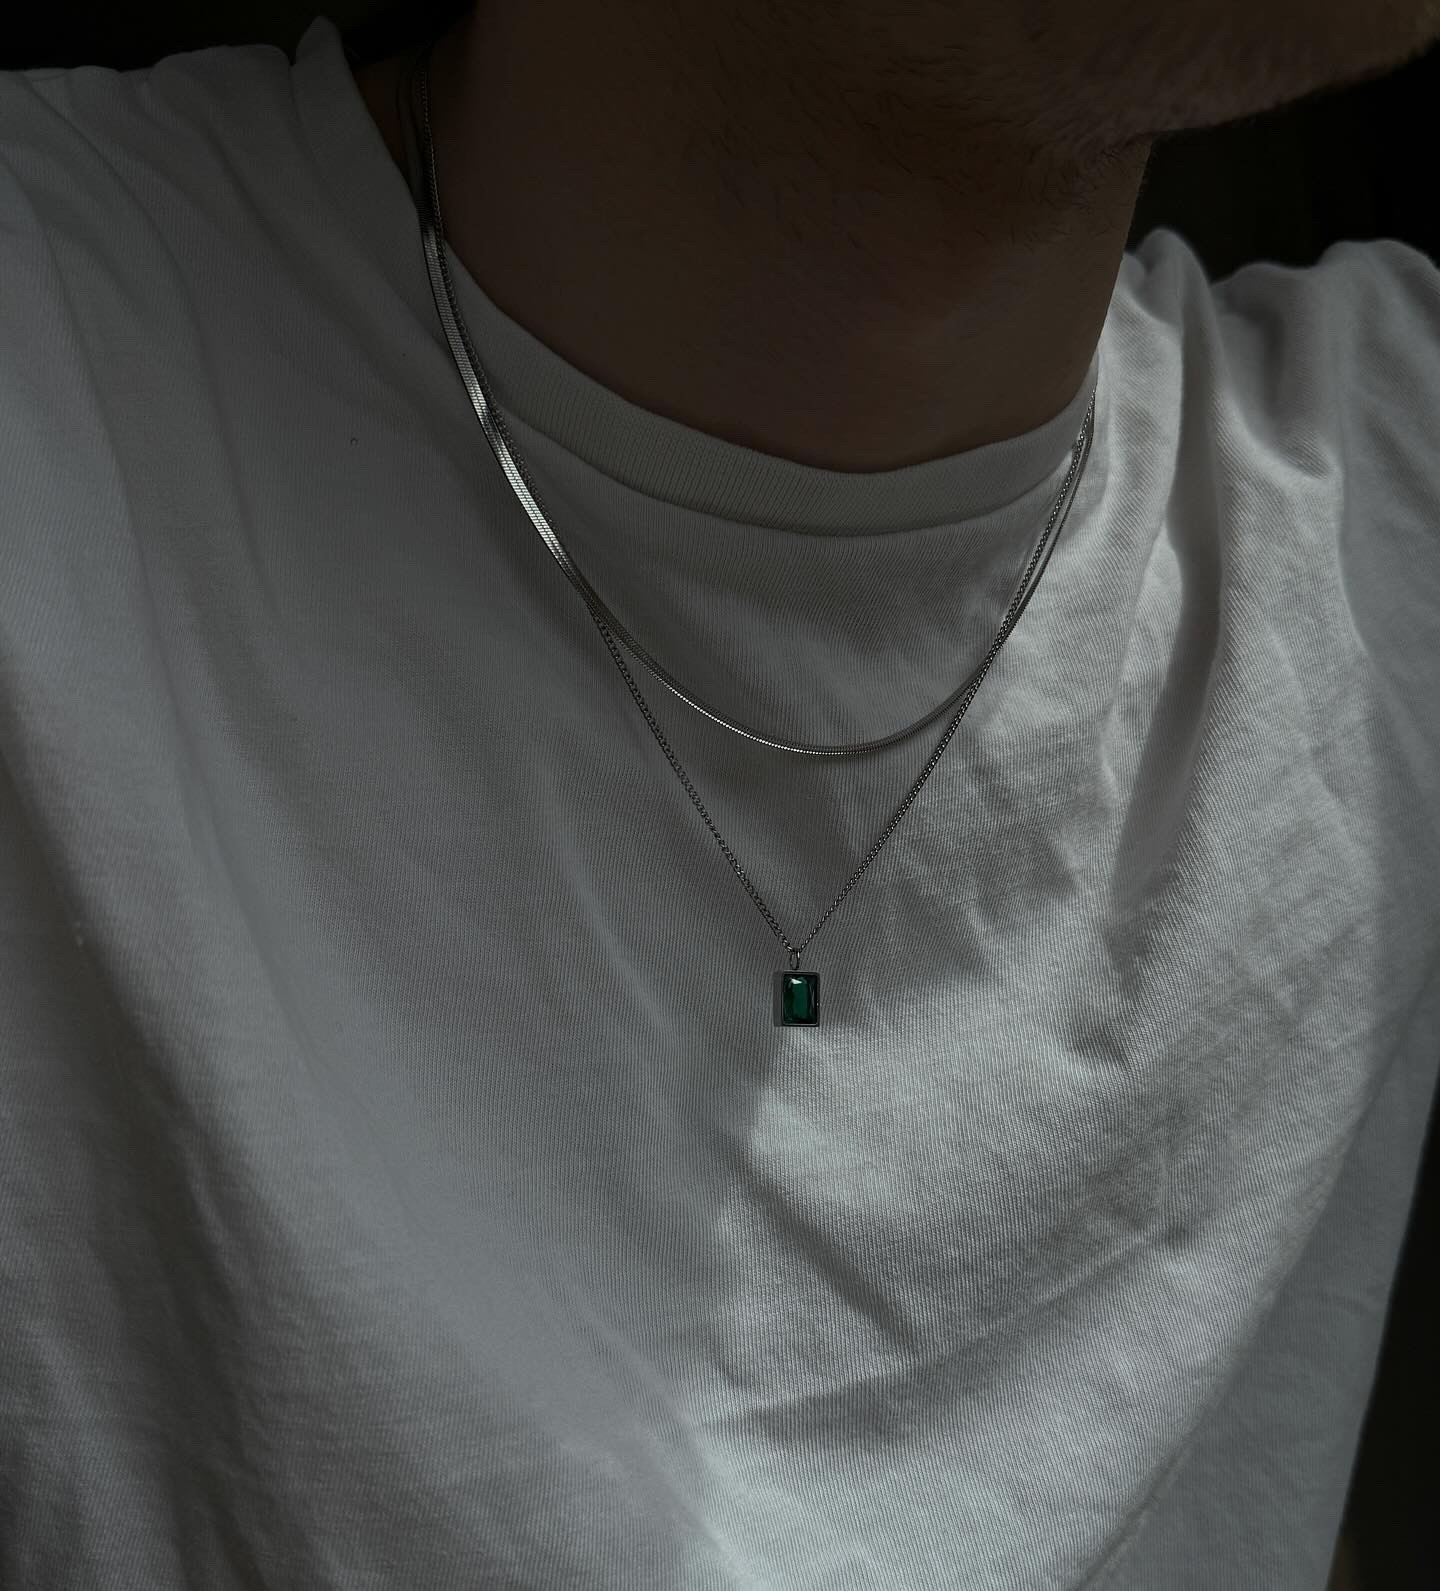 Mirror-Thin Chain Green Stone Necklace